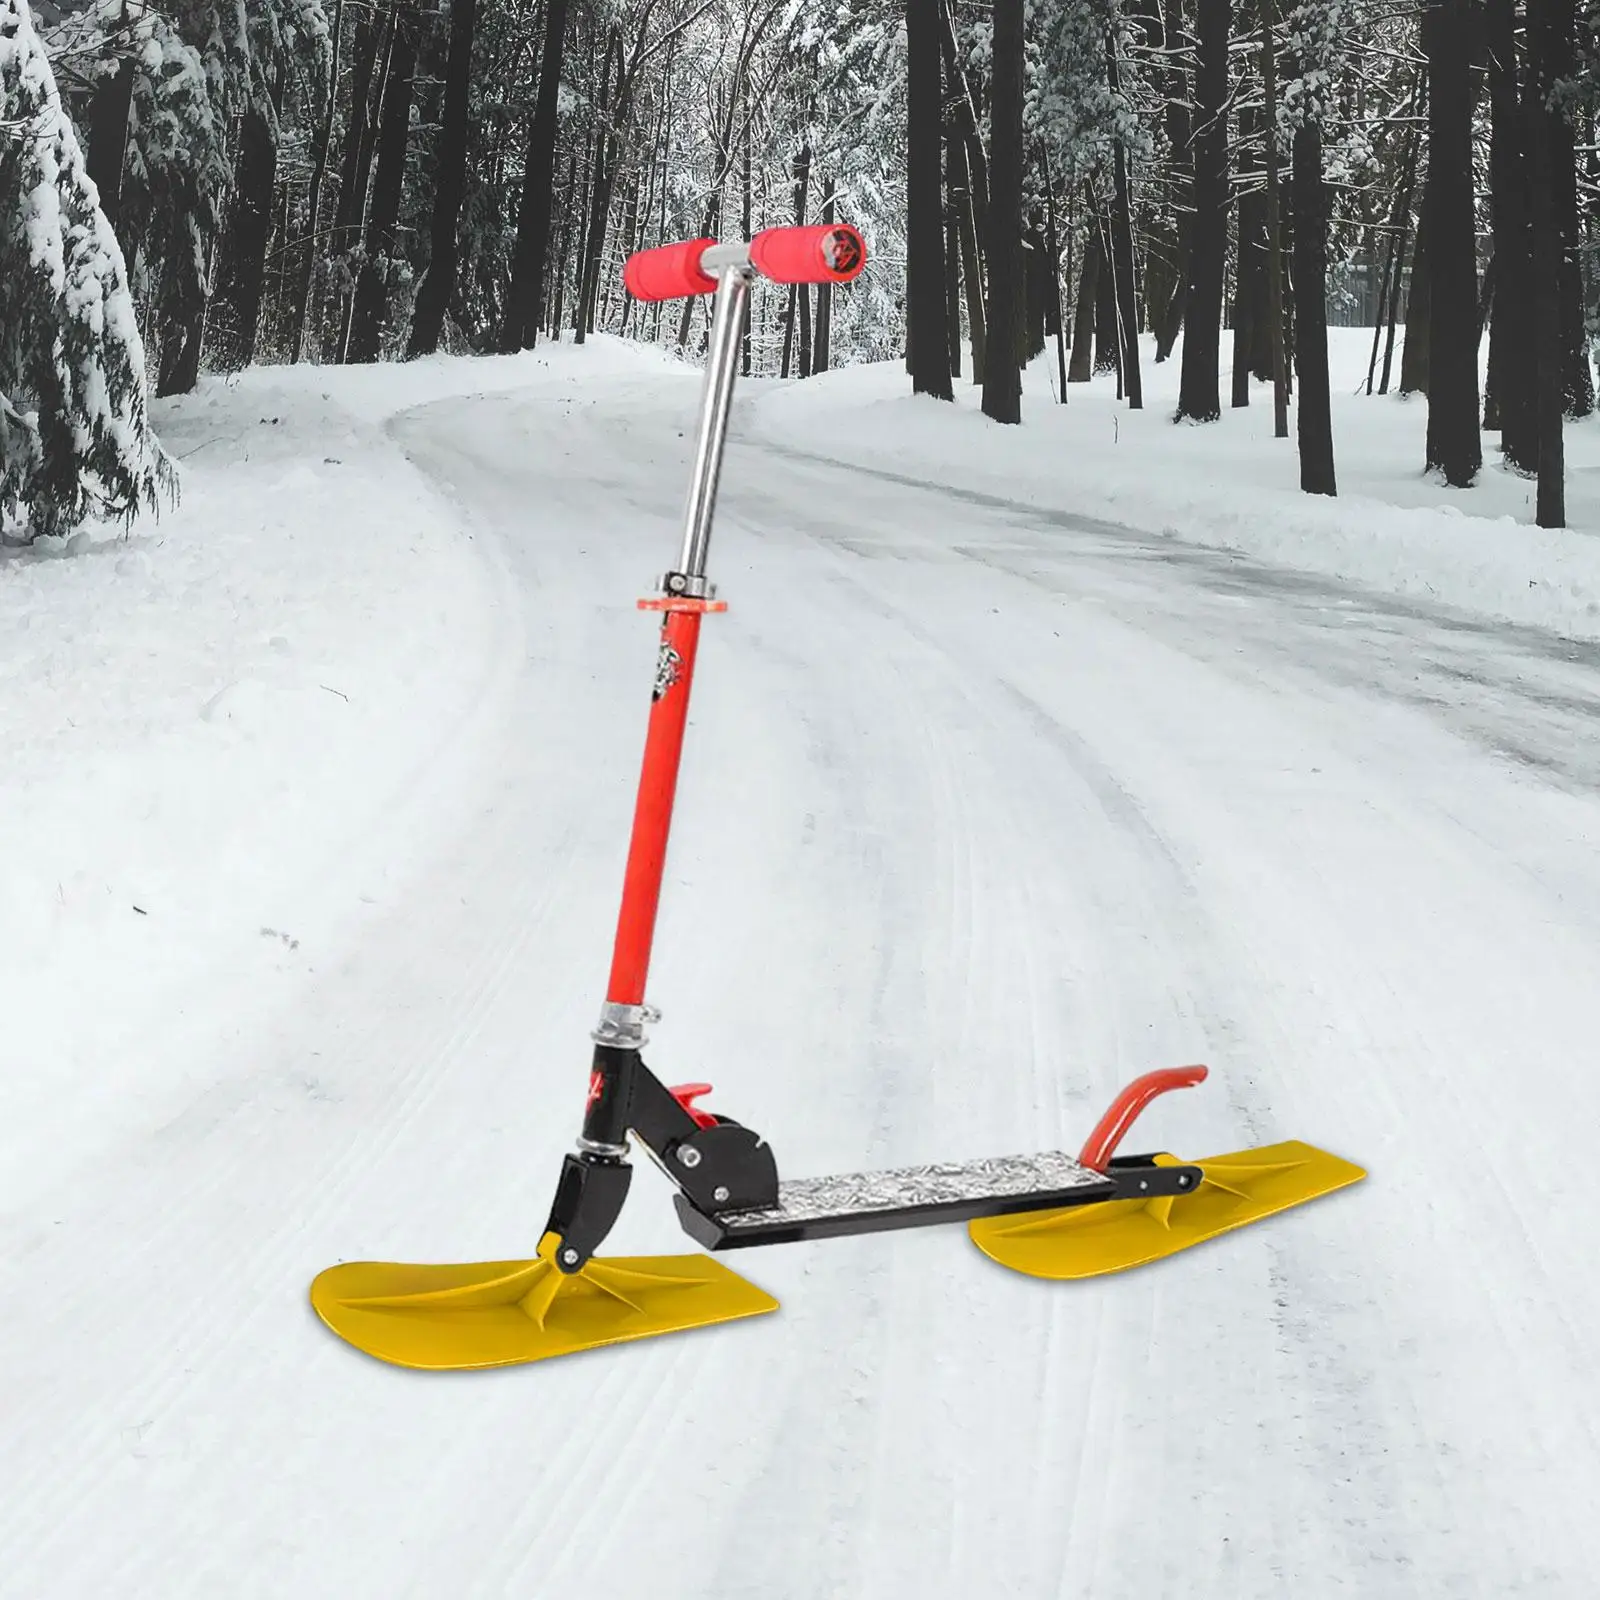 2x Snow Sled Ski Scooter Kit Ski Board Sleigh for Game Toys Skiing Outdoor